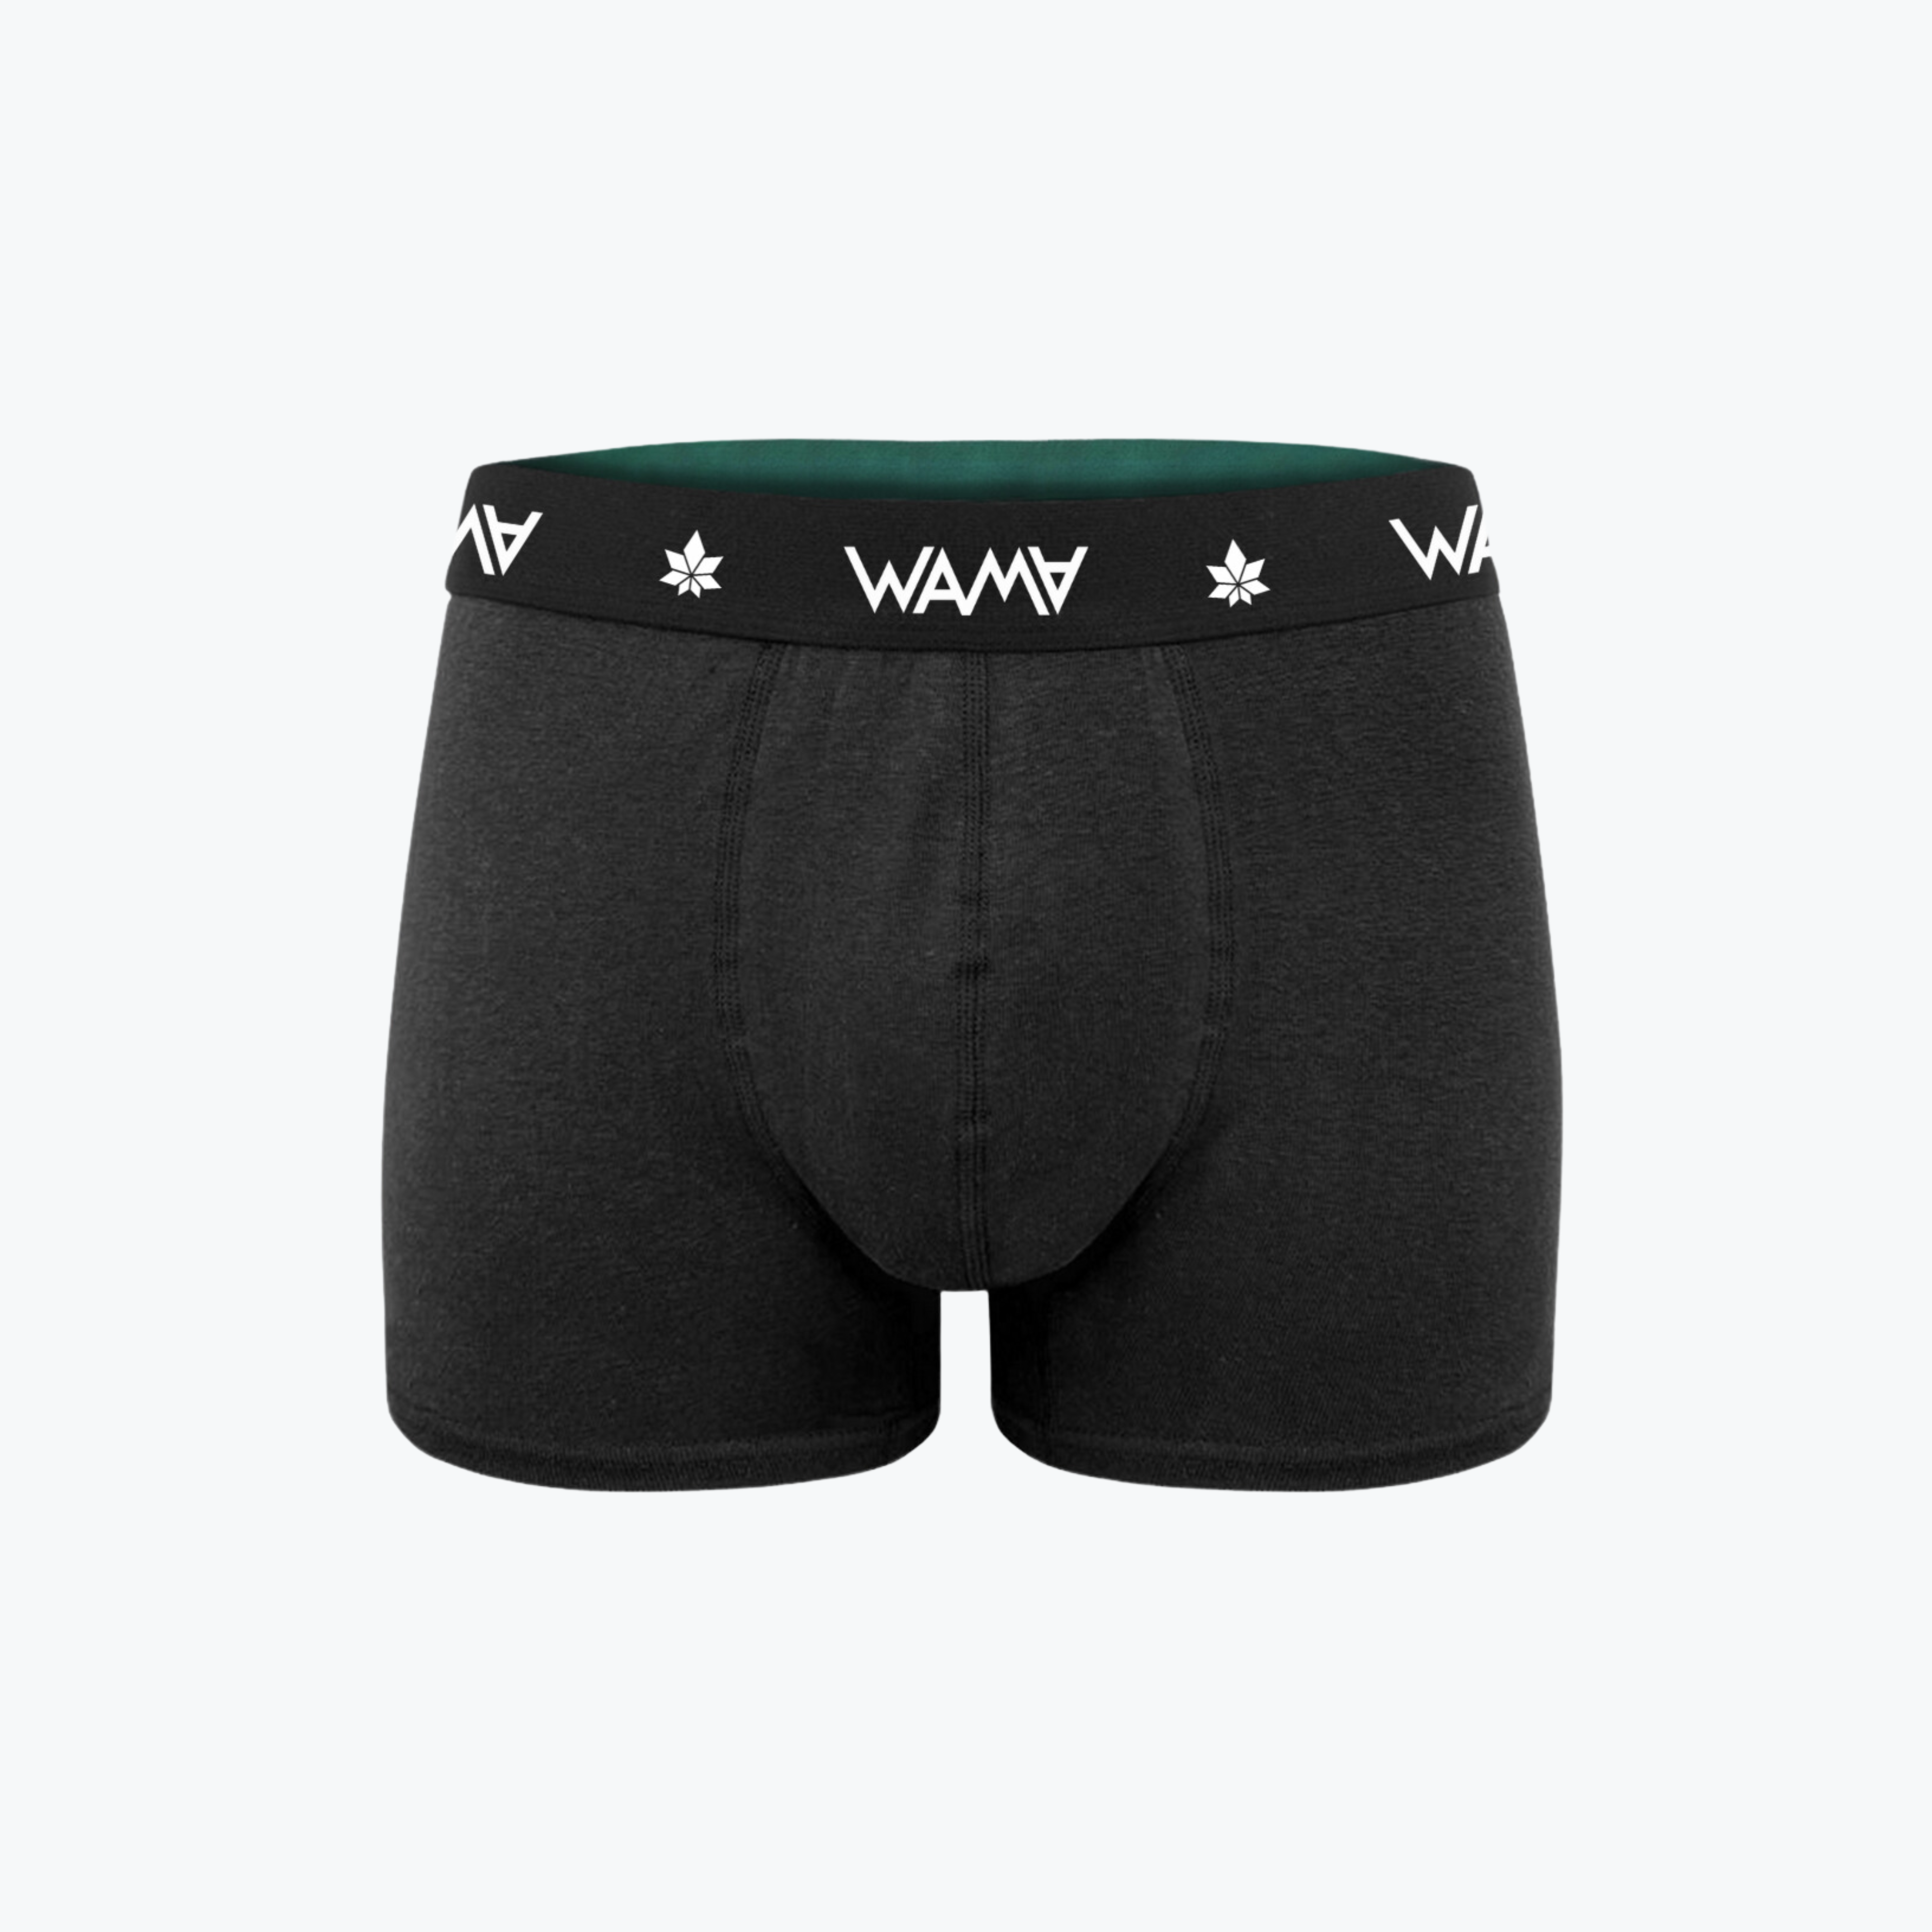 Hemp Trunks Underwear – WAMA Underwear